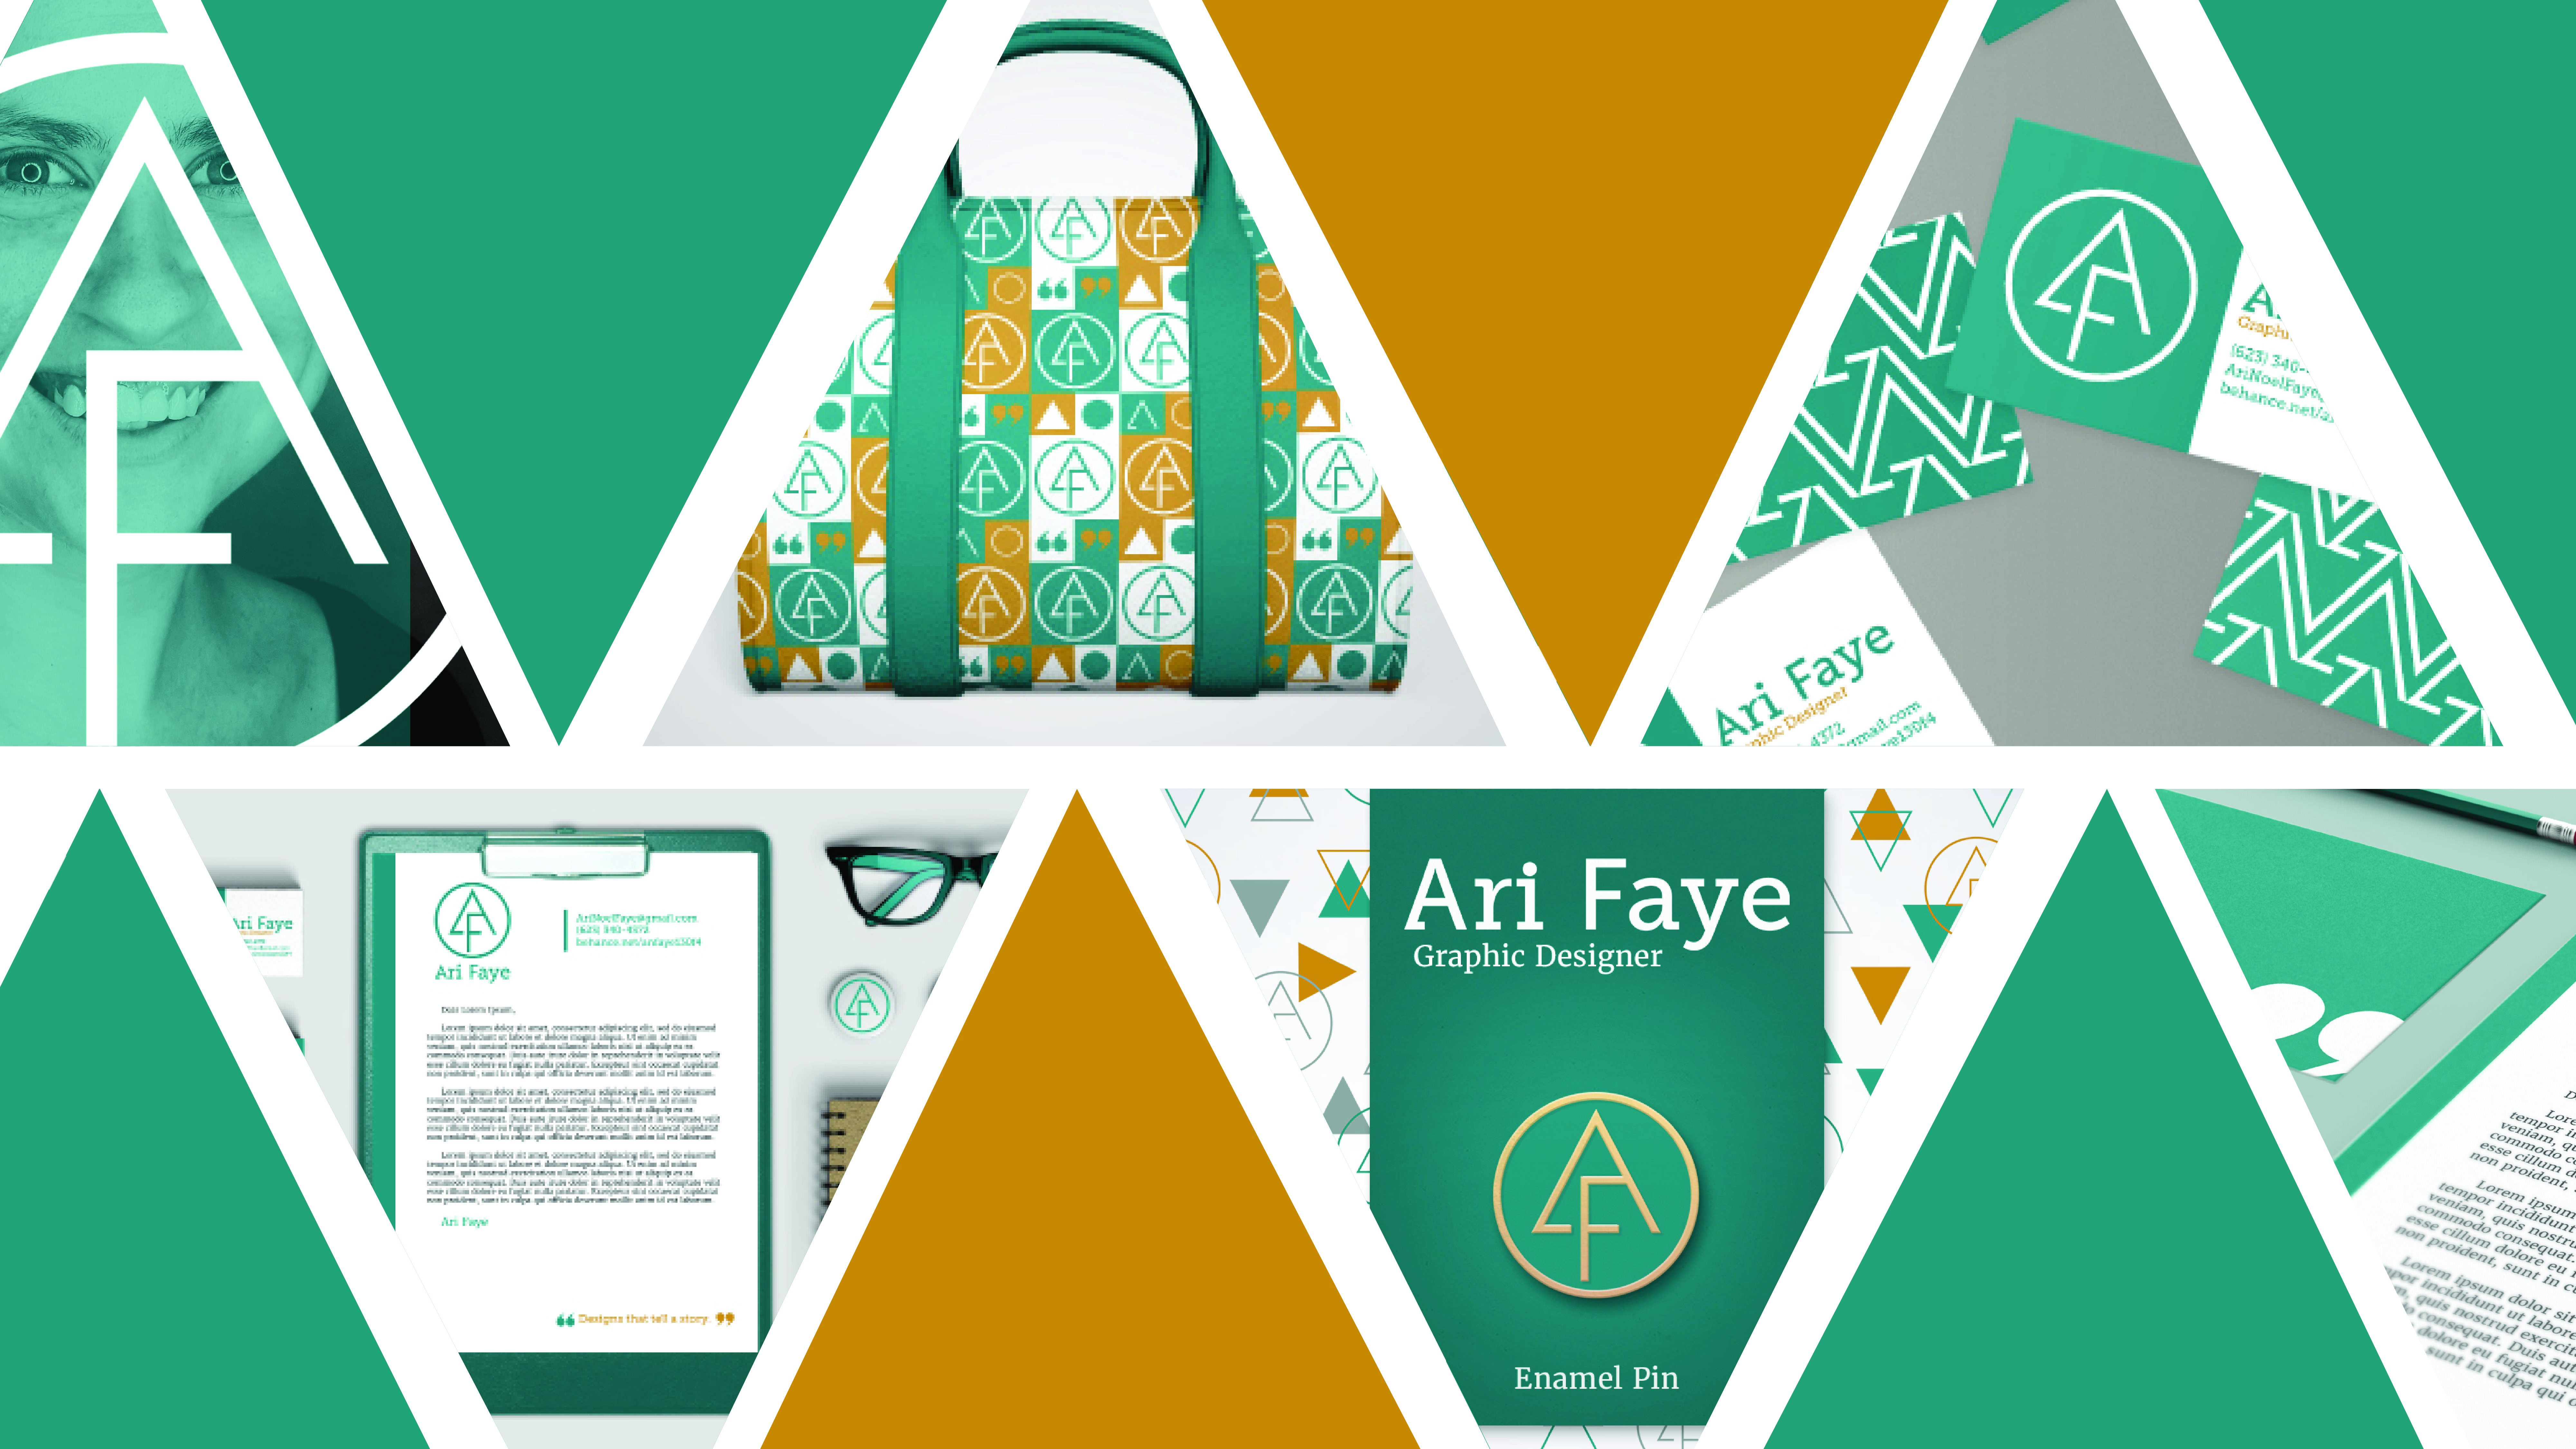 featured image:Ari Faye Personal Branding